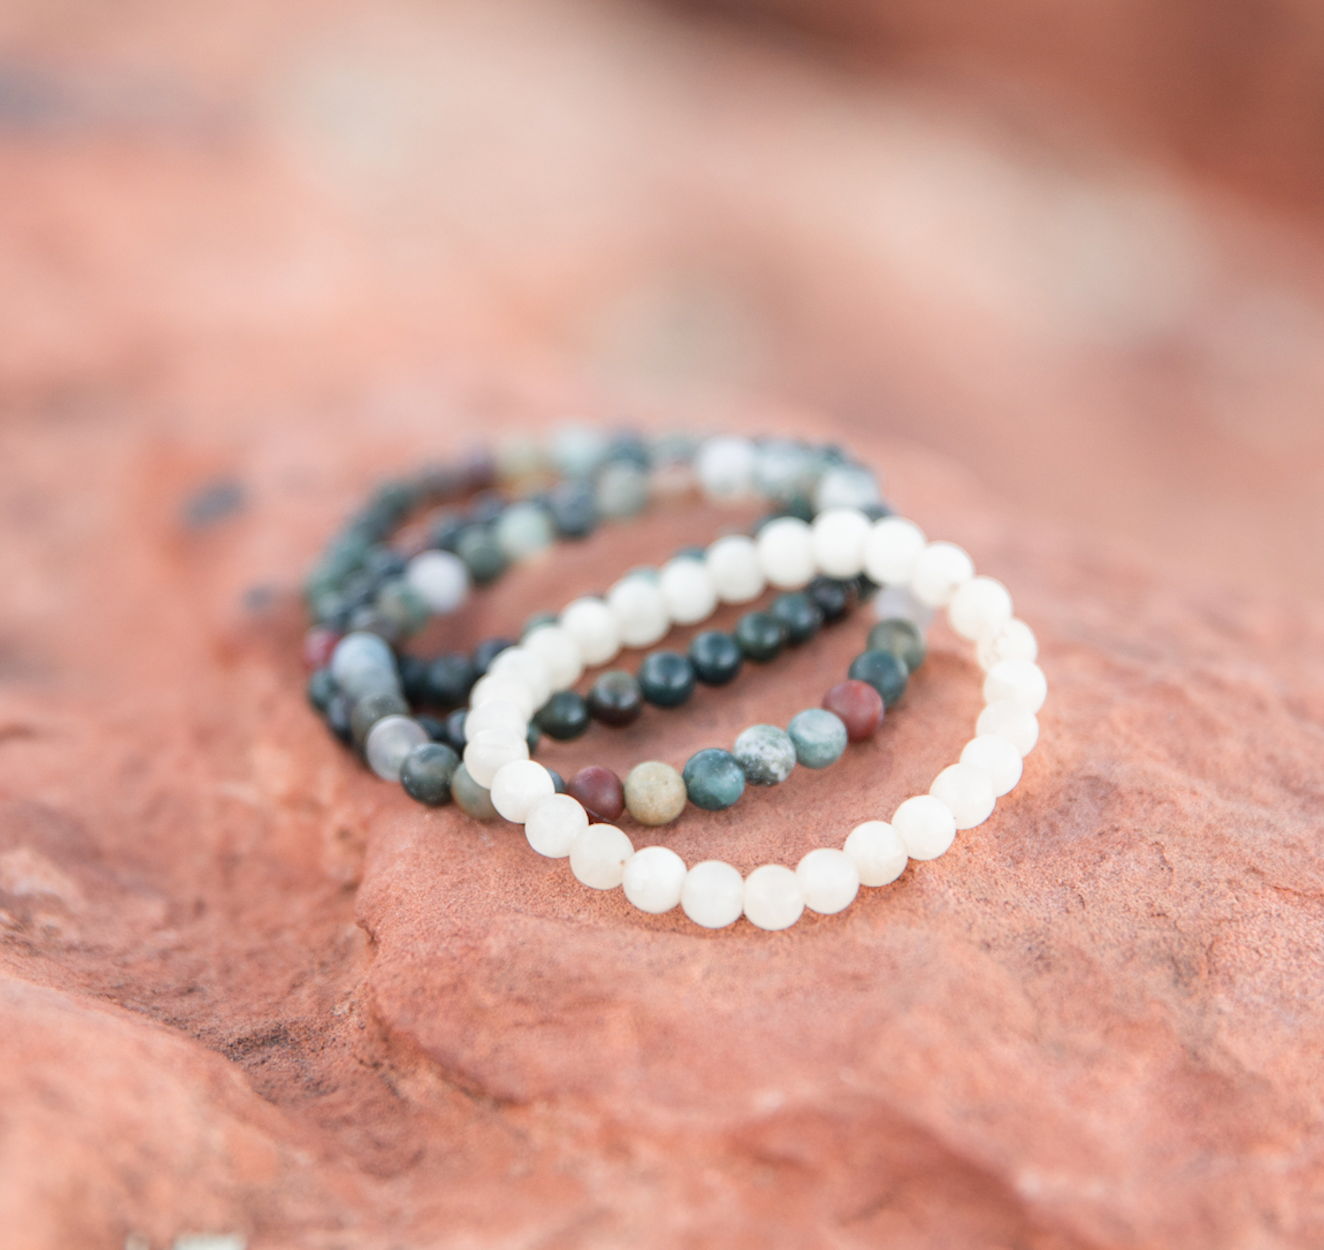 crystal jewelry: crystal bracelets in sedona, arizona used for energy healing